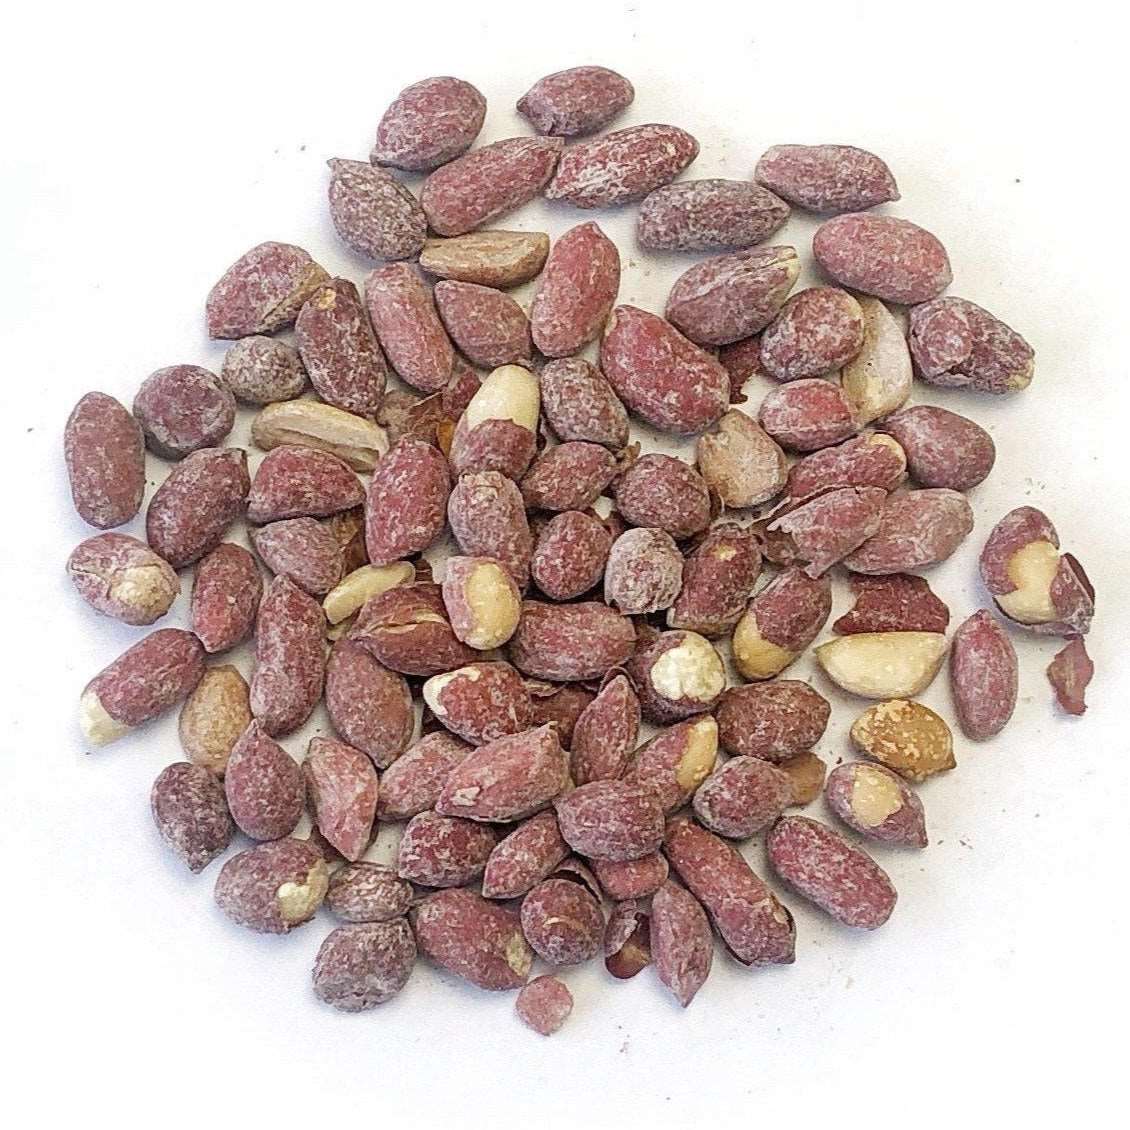 Roasted Salted Red Skin Peanuts - Nuts Pick